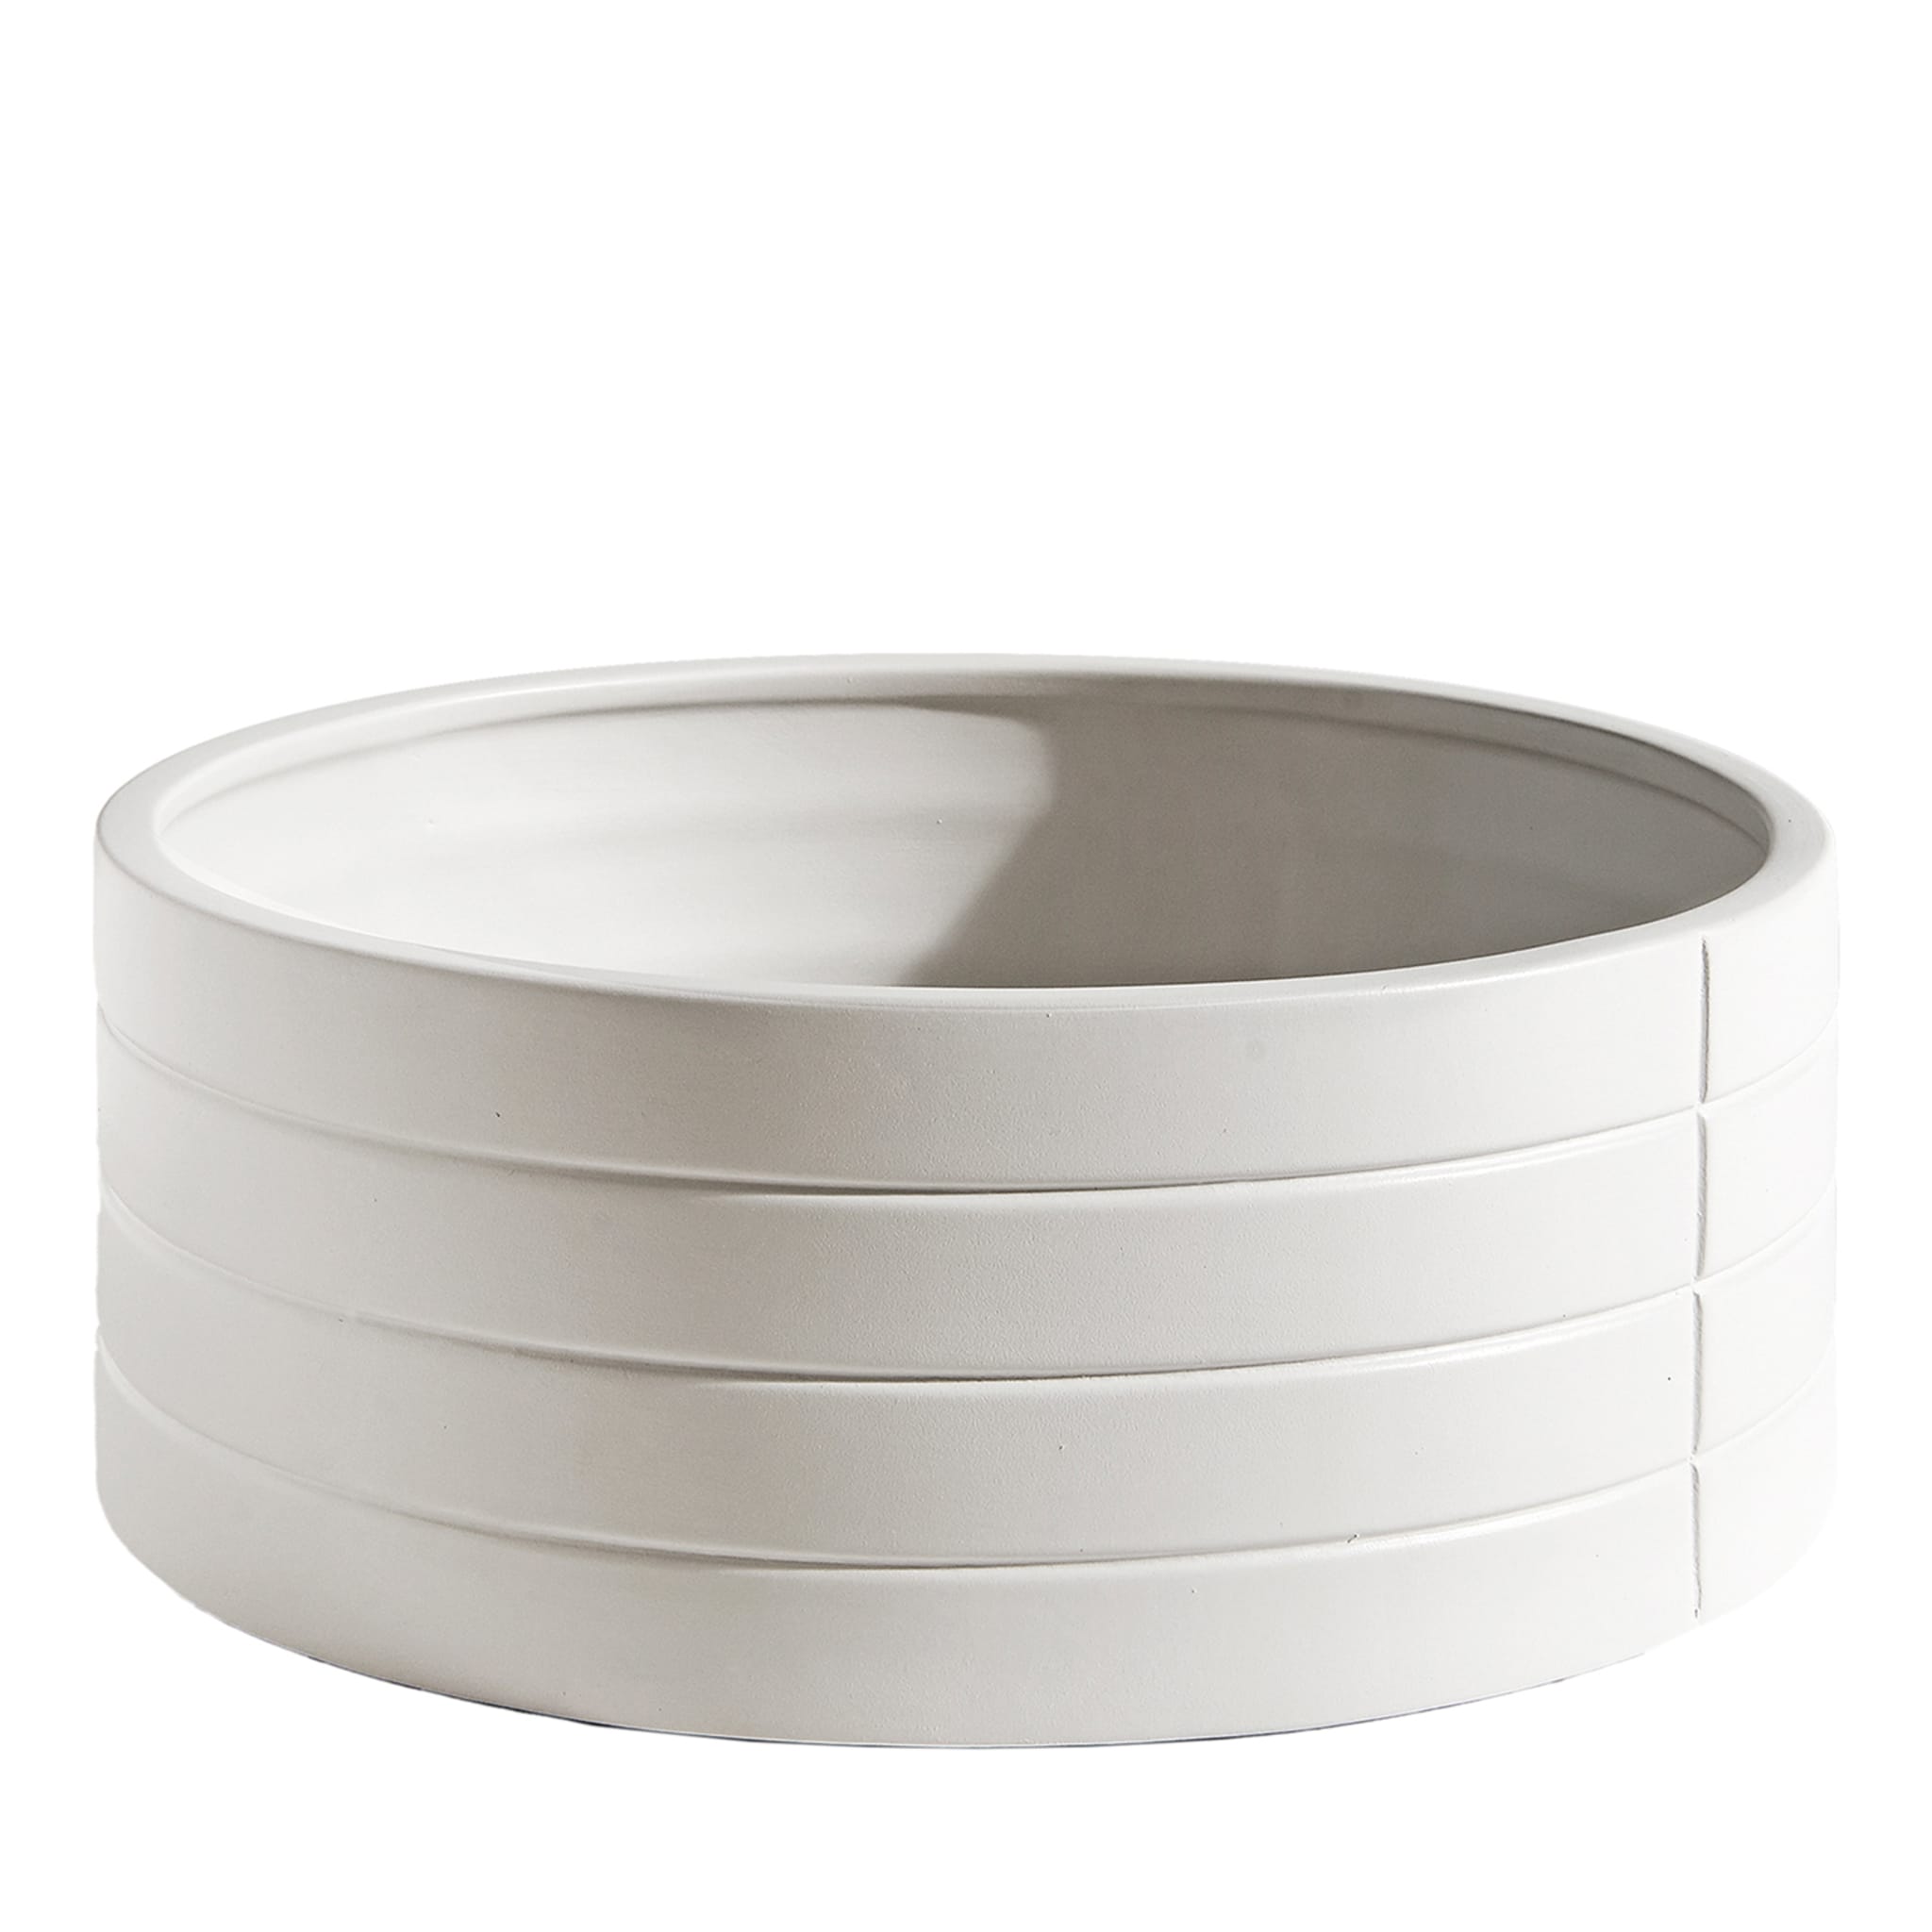 Rikuadra Vaso in ceramica bianca #1 - Vista principale